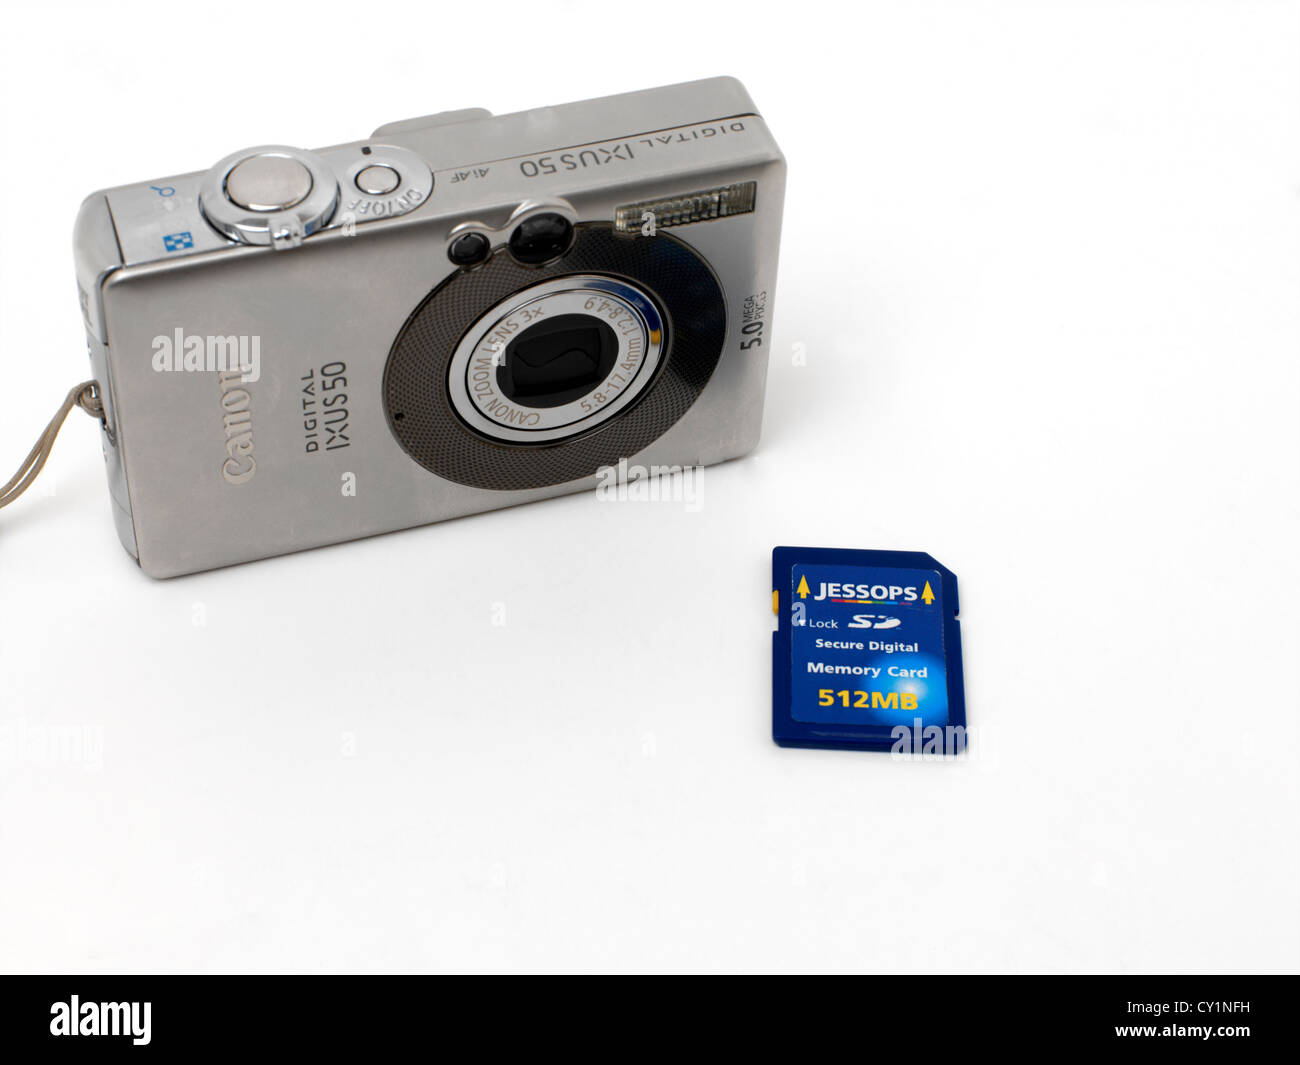 Canon Ixus 50 Digital Camera with Secure Digital Memory Card 512mb